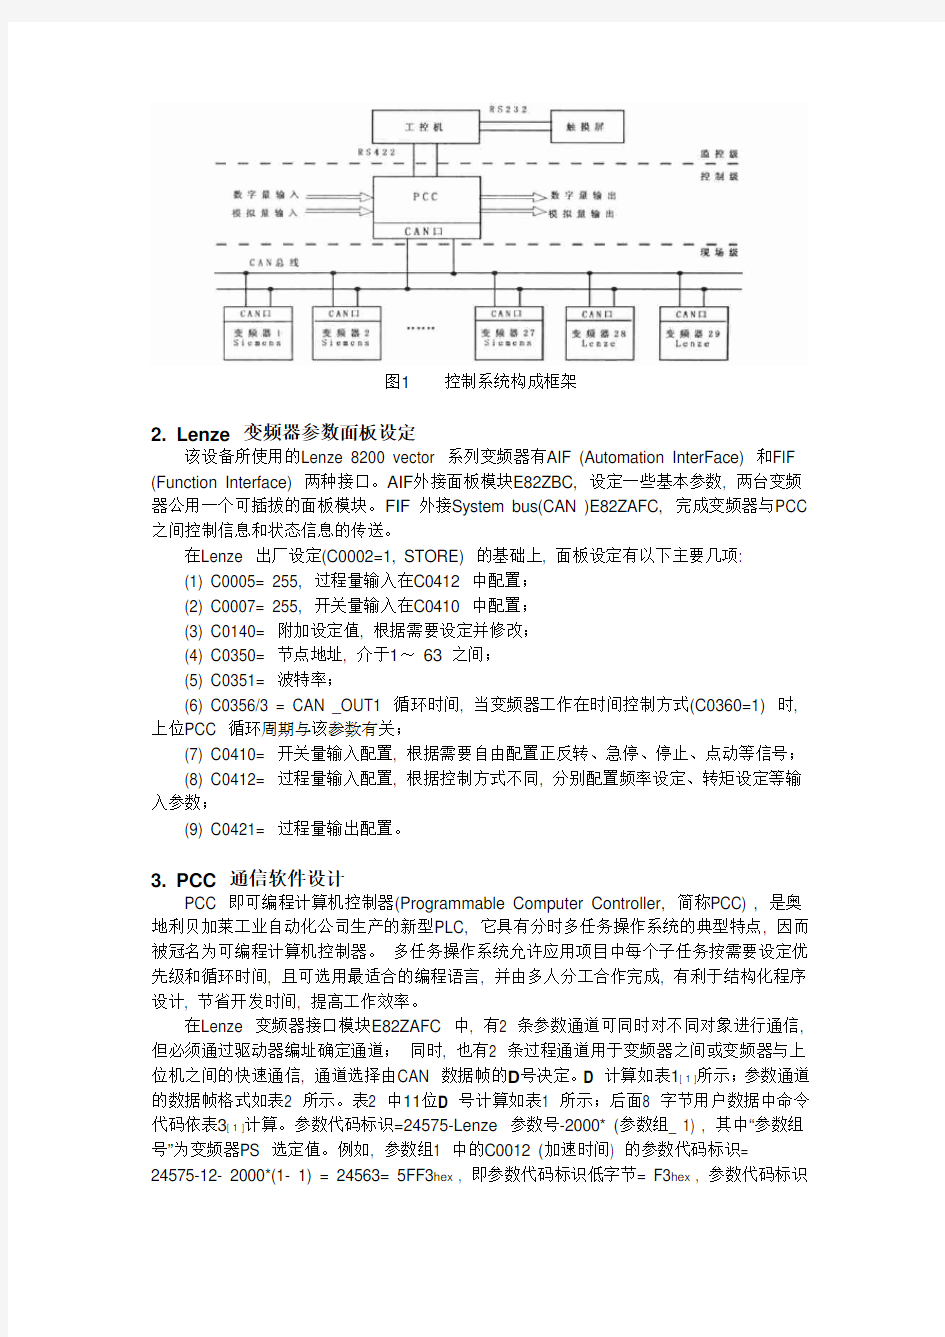 Lenze 变频器与PCC的CAN通信及其应用